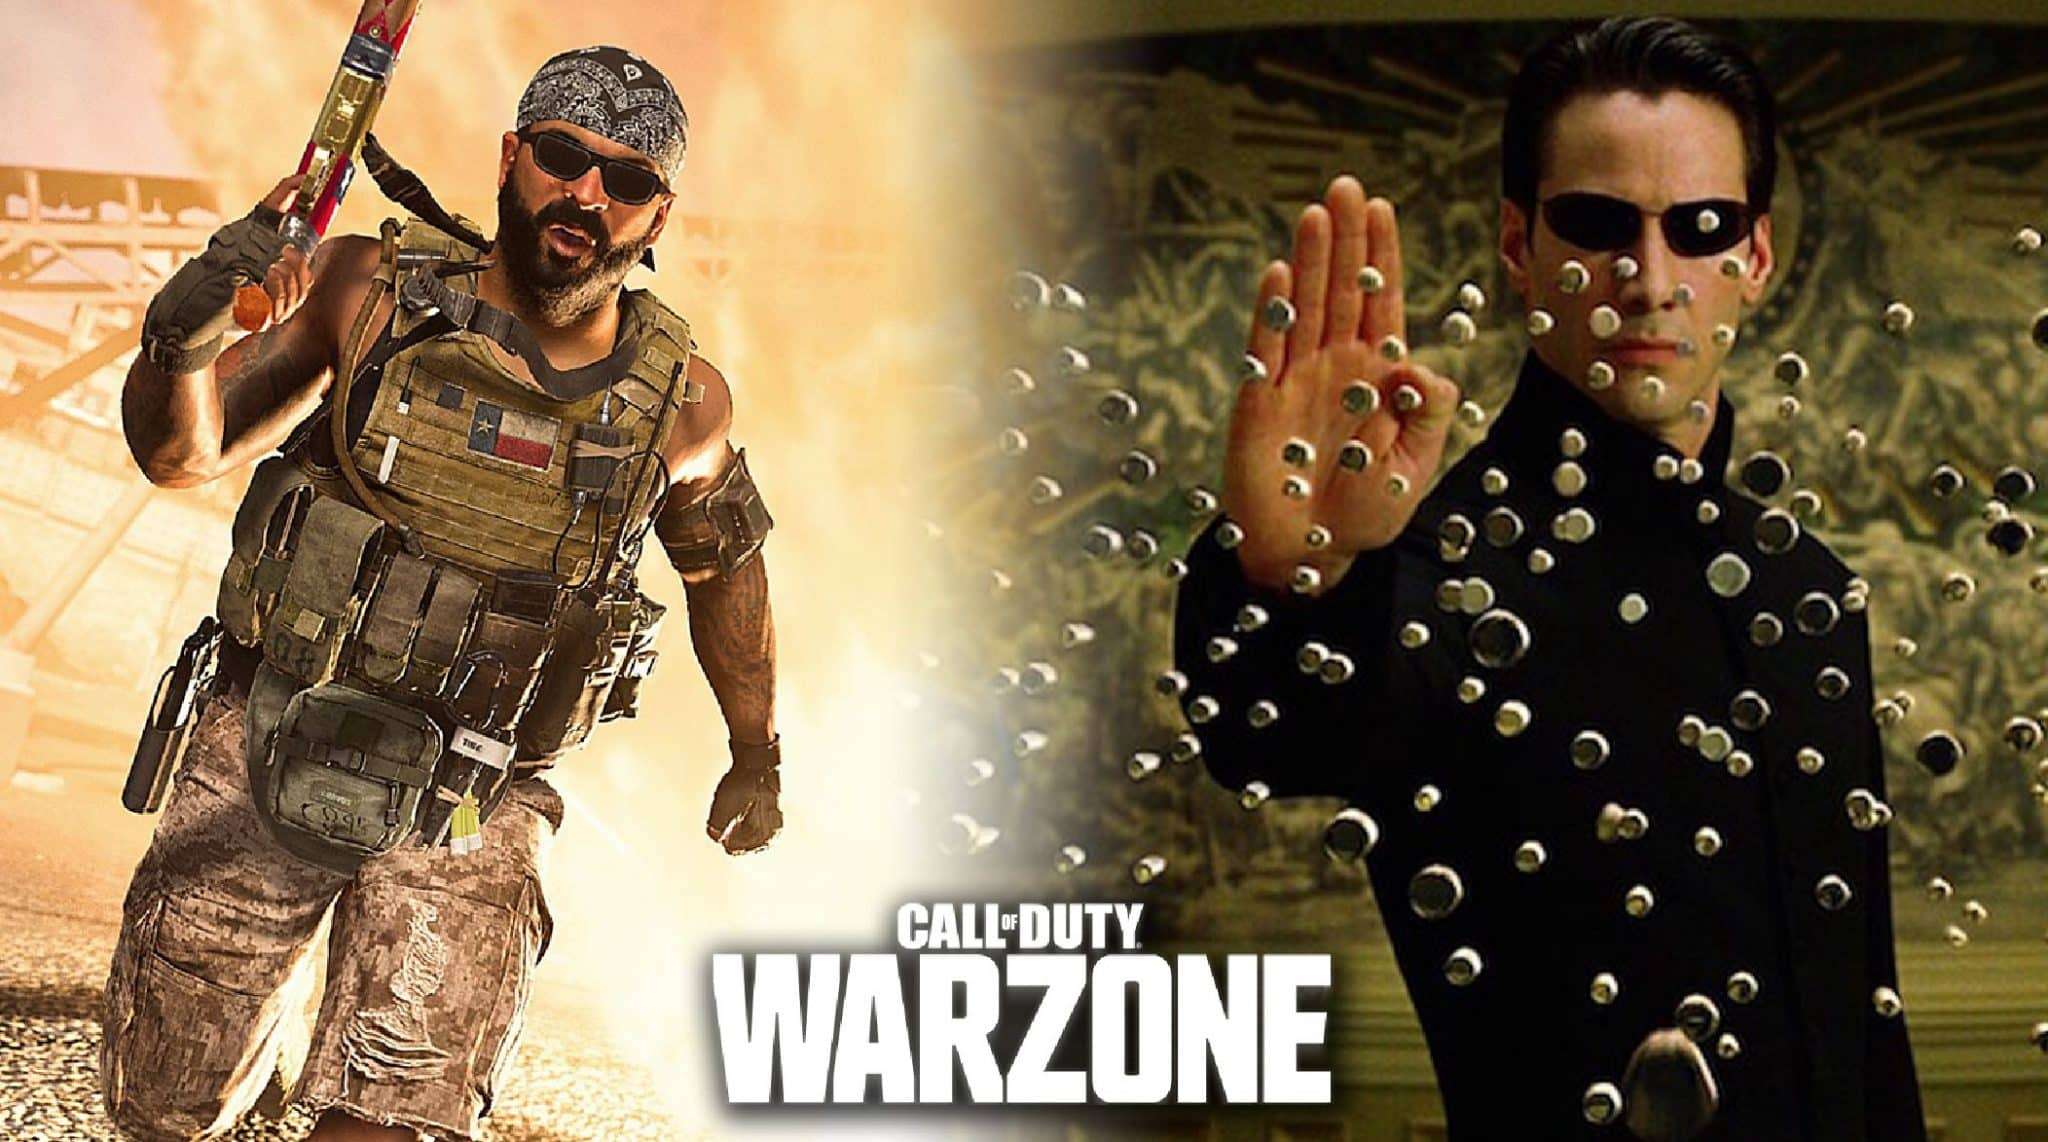 Warzone gameplay next to The Matrix